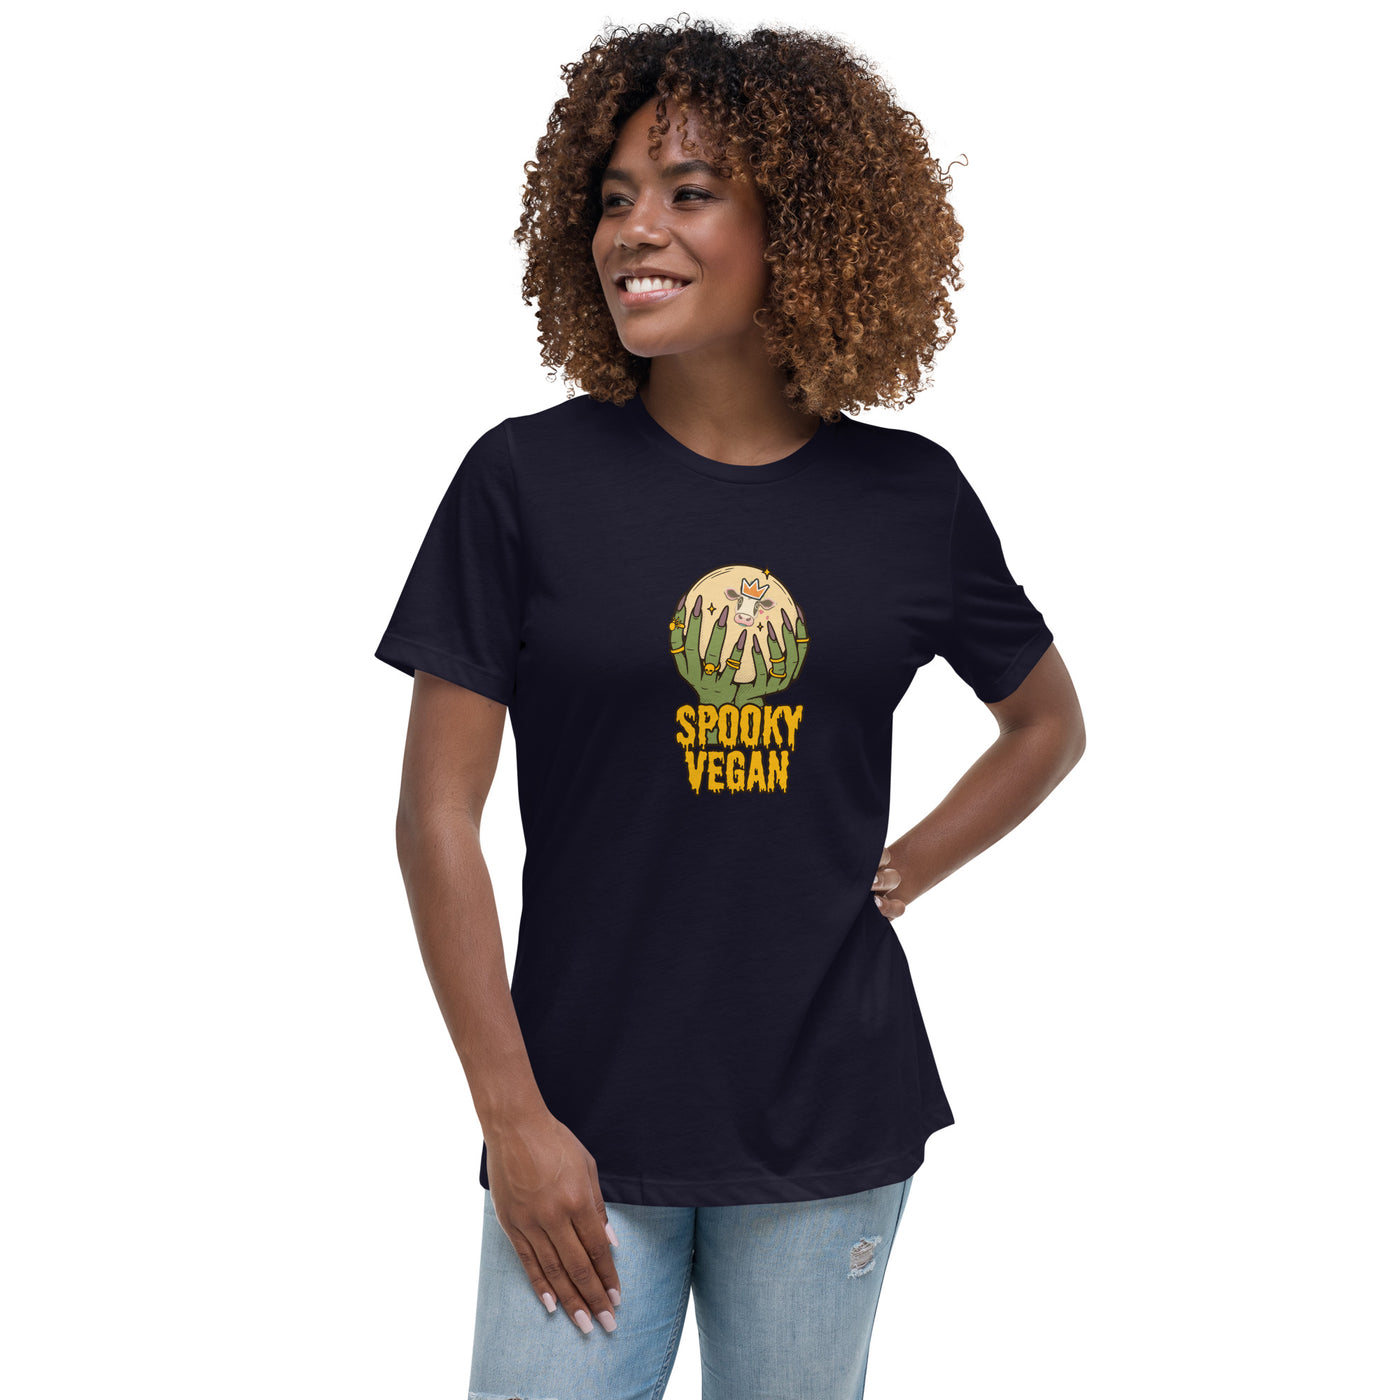 Women's T-Shirt - Spooky Vegan